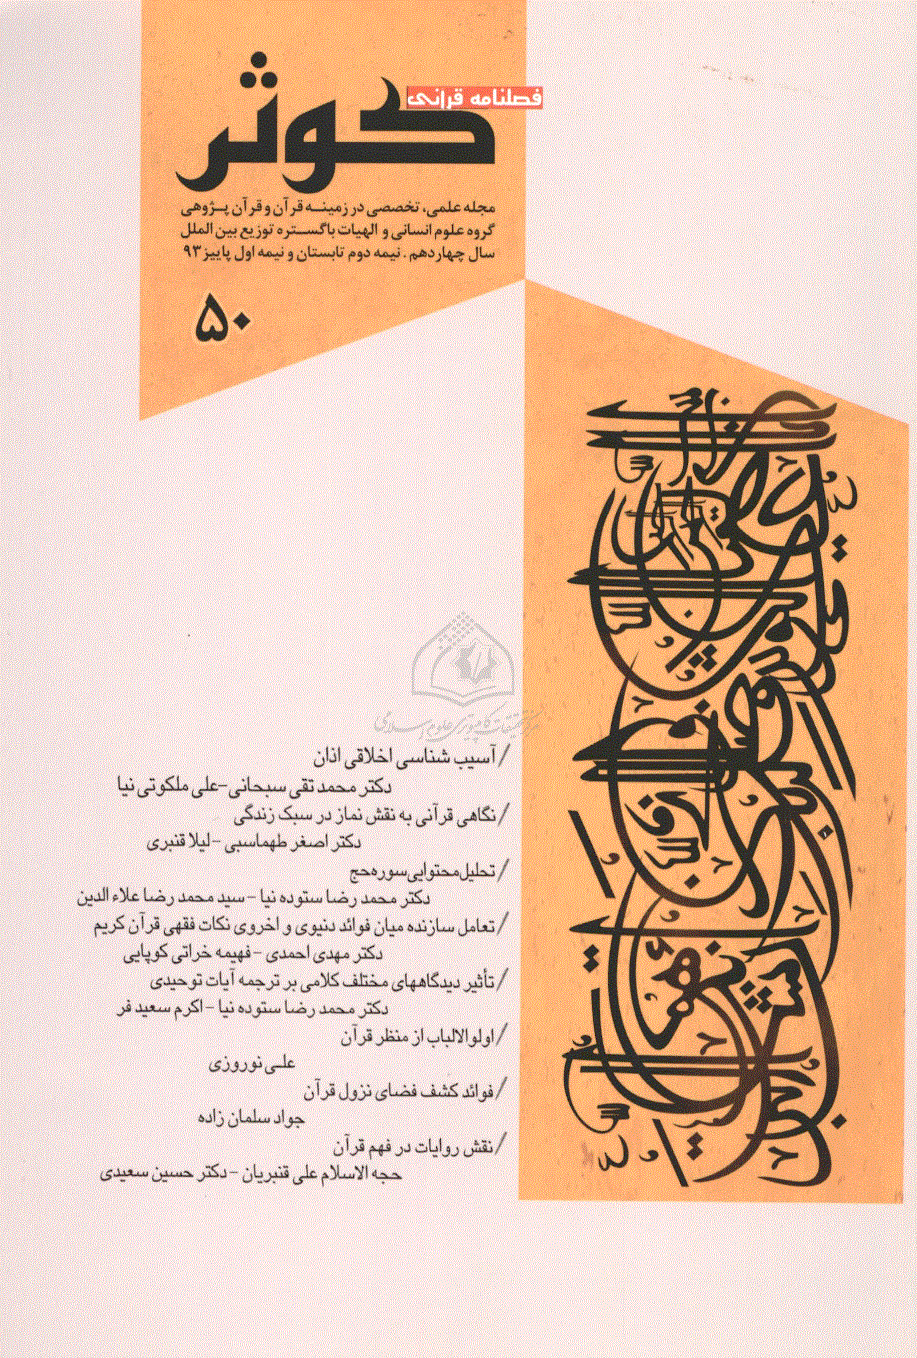 قرآنی کوثر - نیمه ی دوم تابستان و نیمه ی اول پاییز 1393 - شماره 50